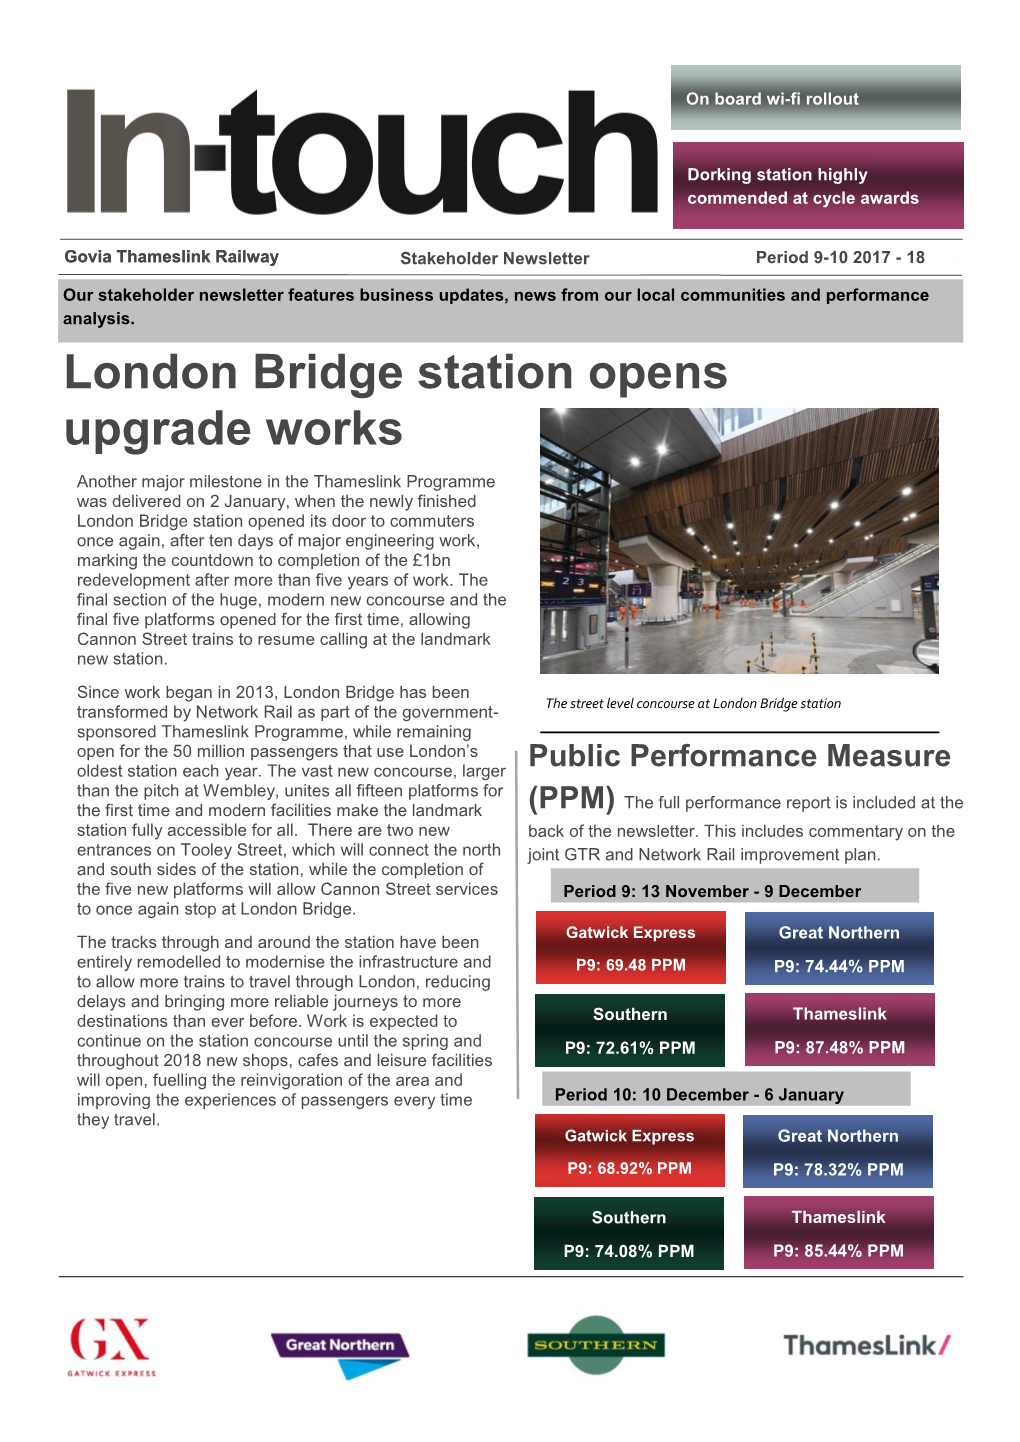 London Bridge Station Opens Upgrade Works